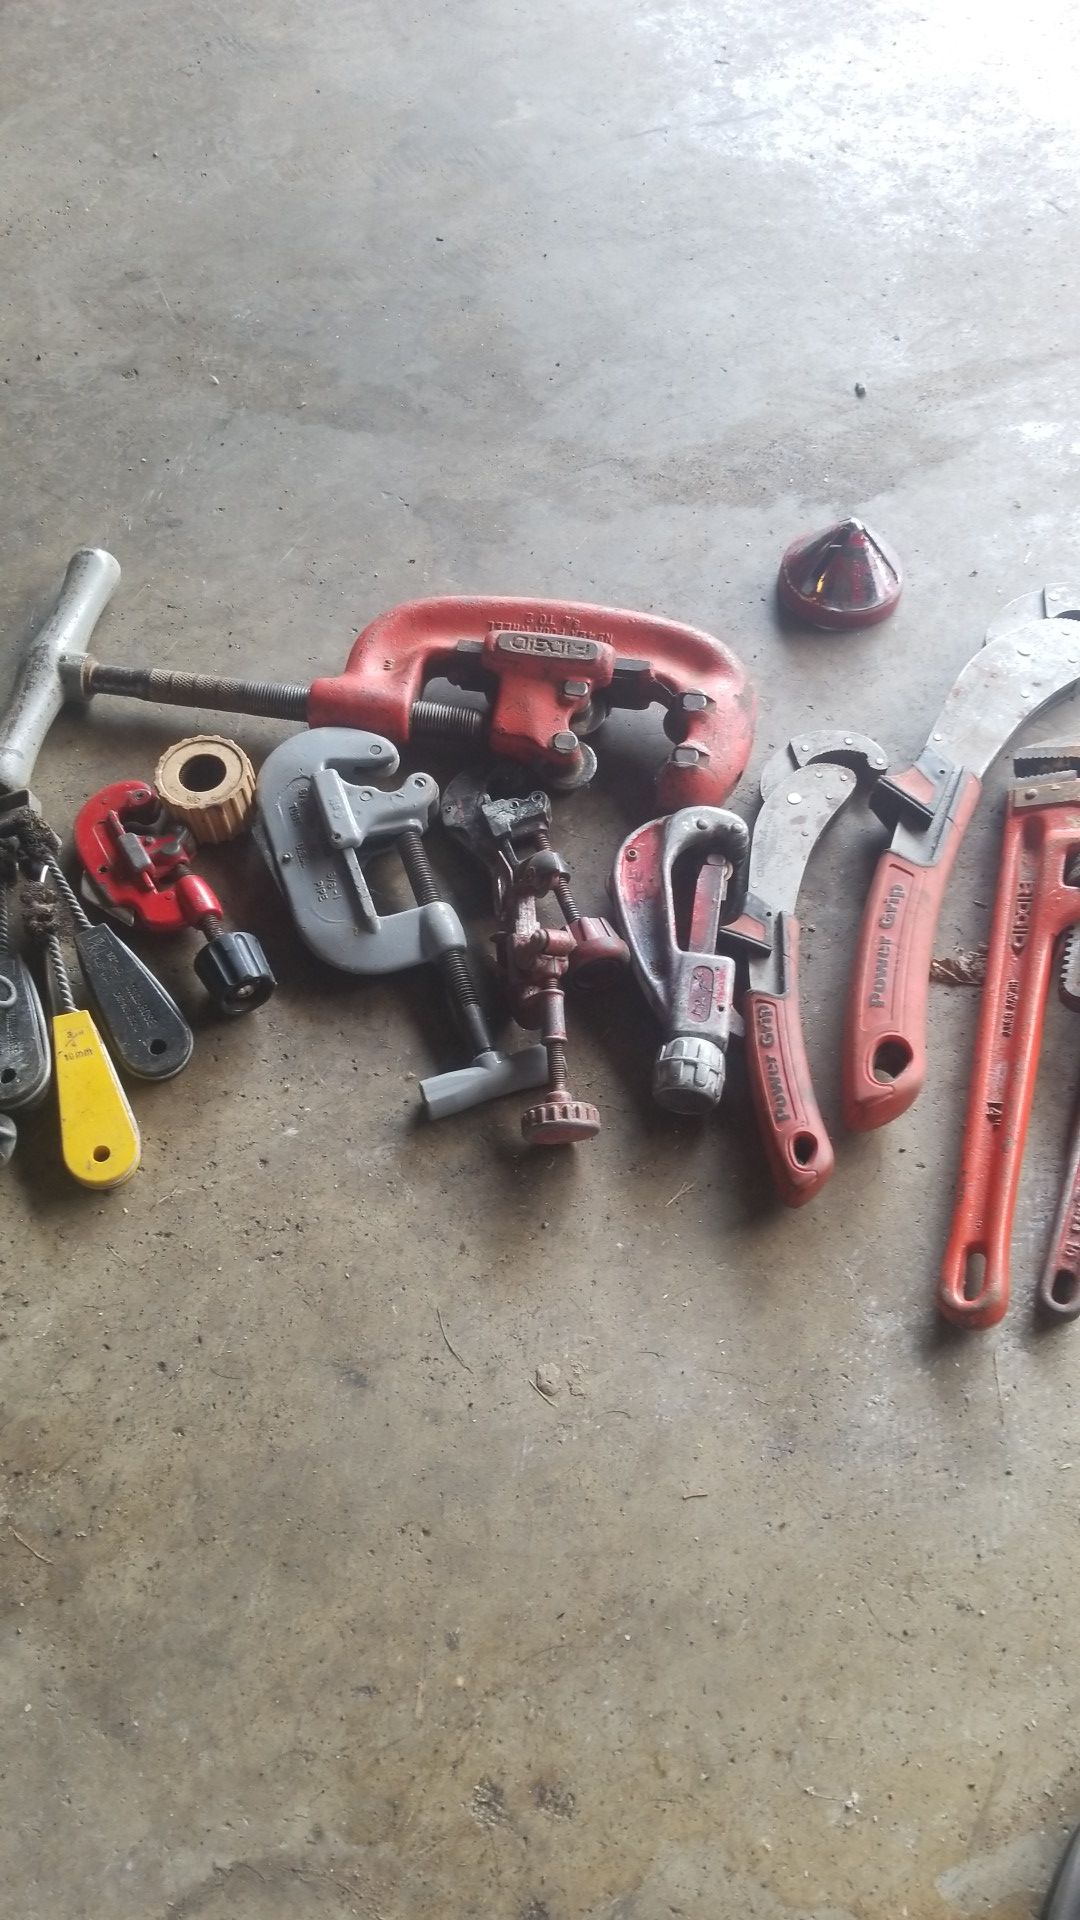 Plumbing tools